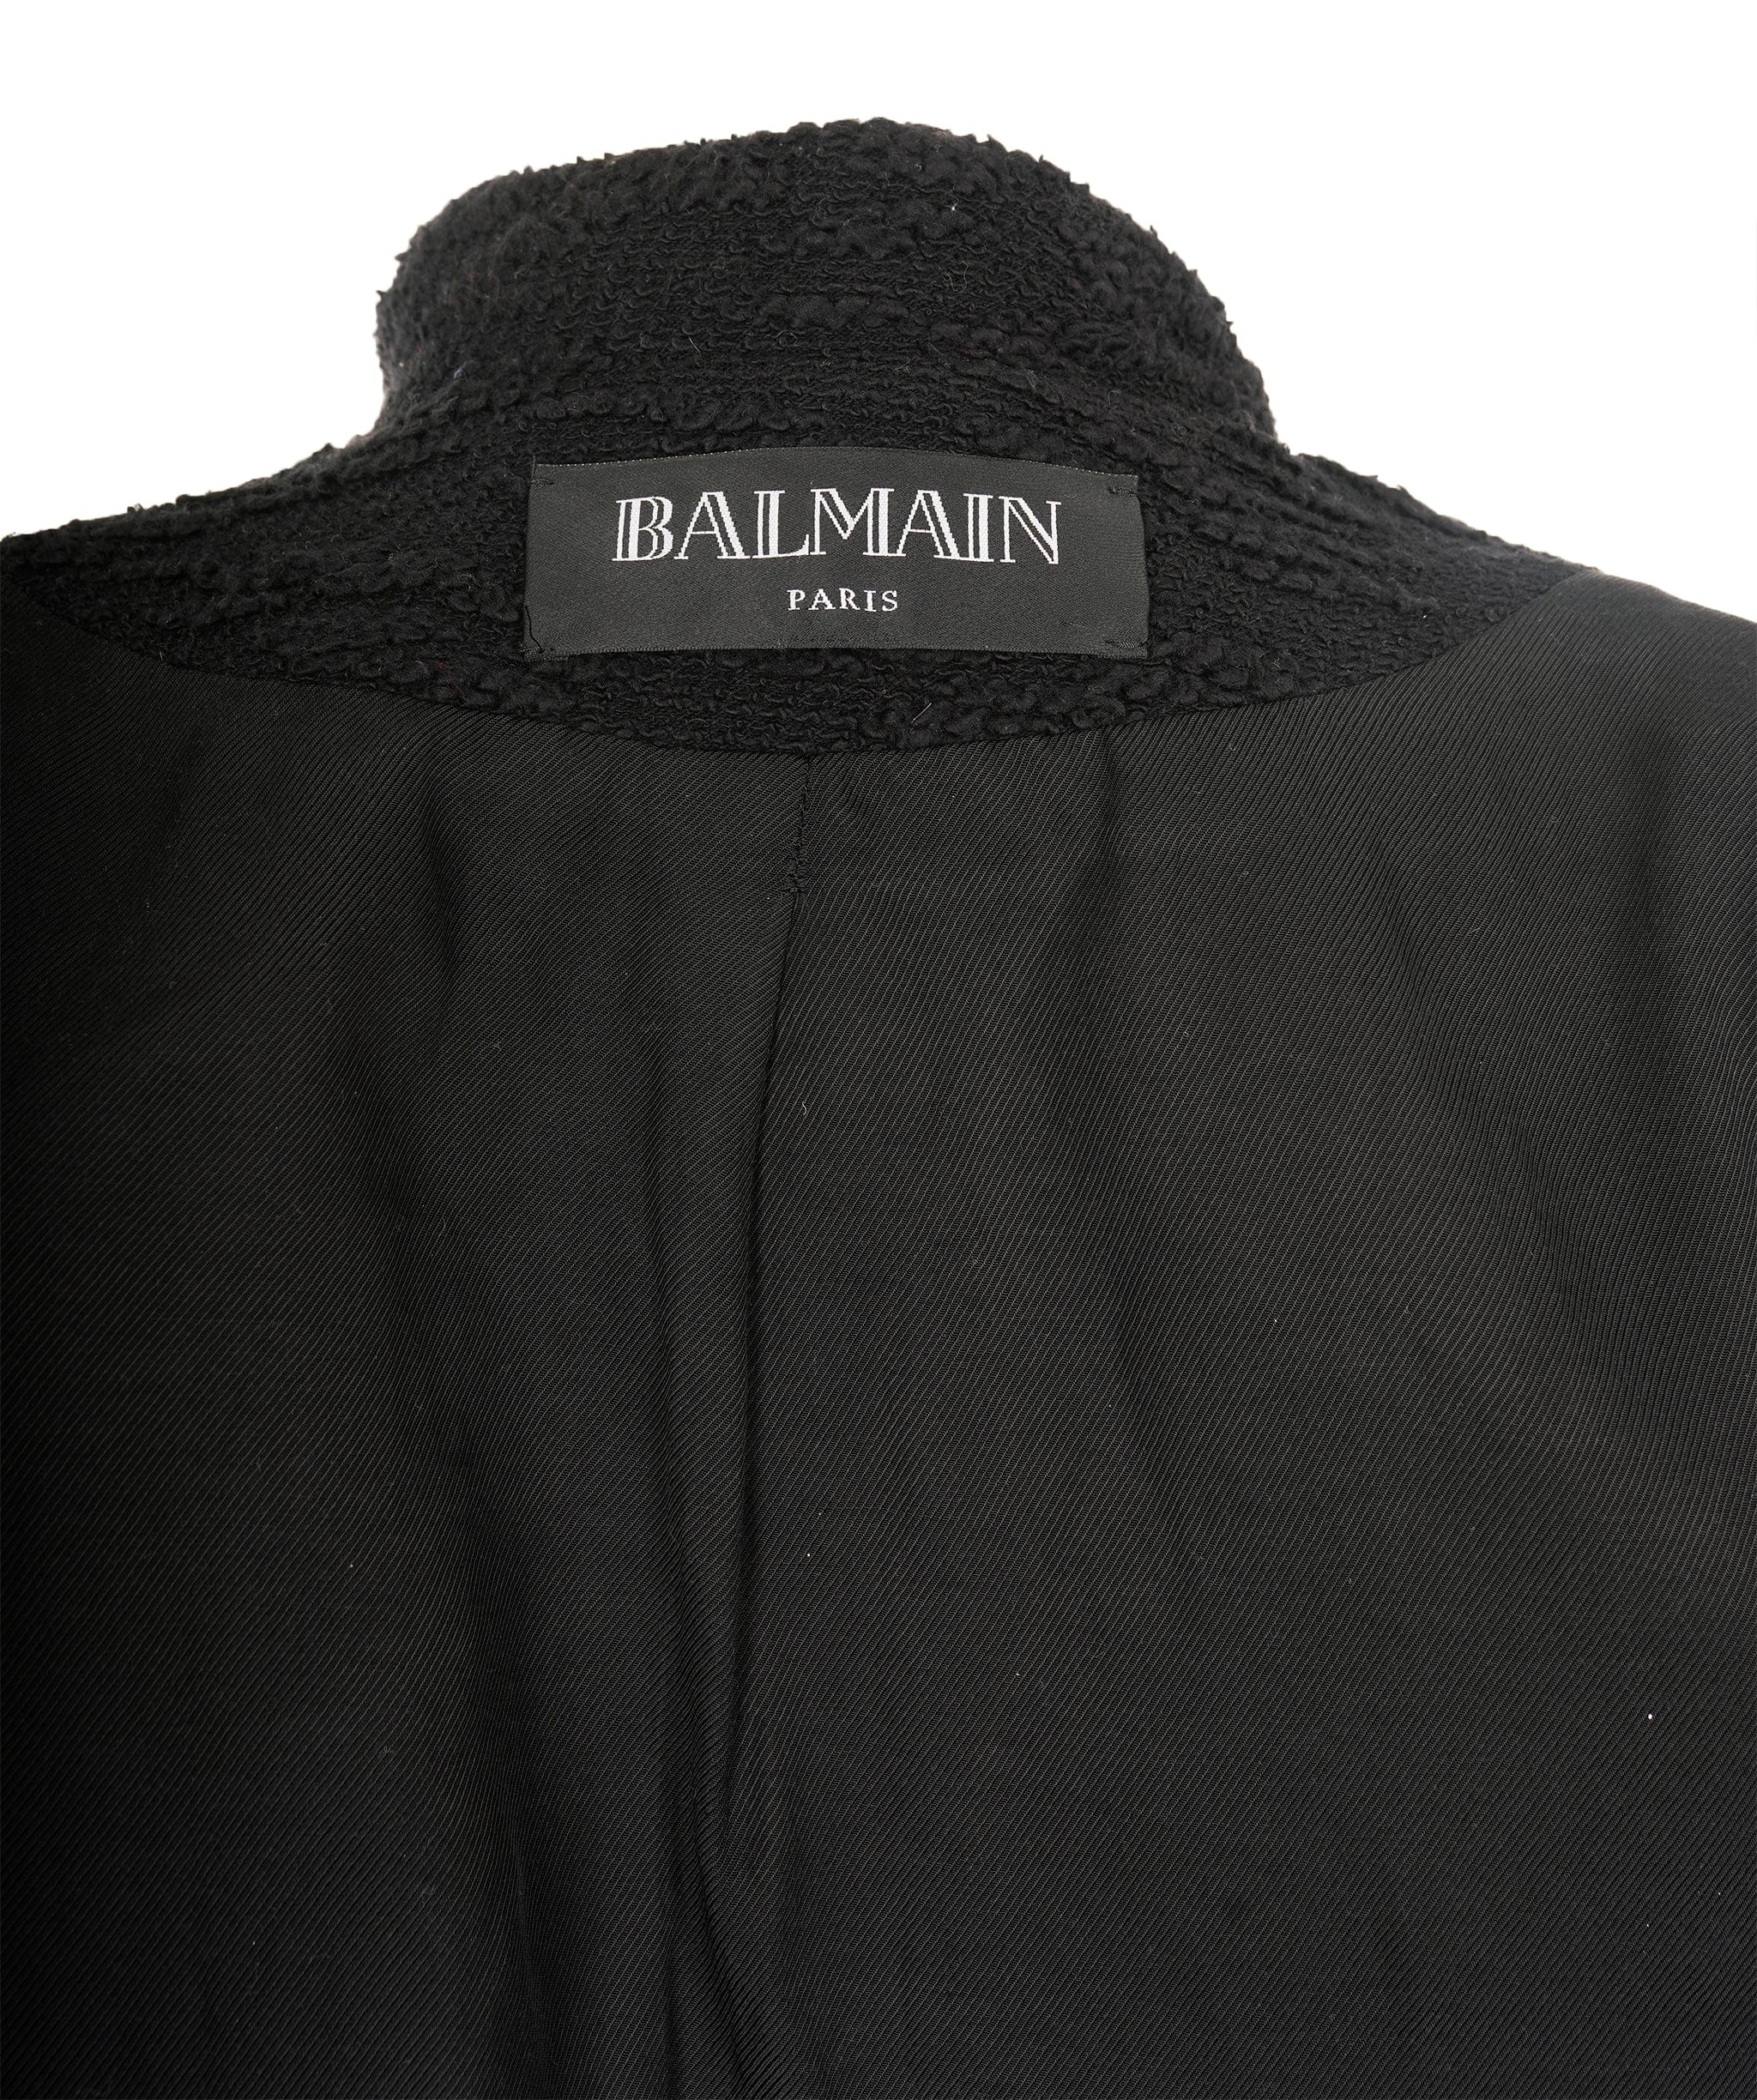 Balmain Balmain black blazer ALL0346